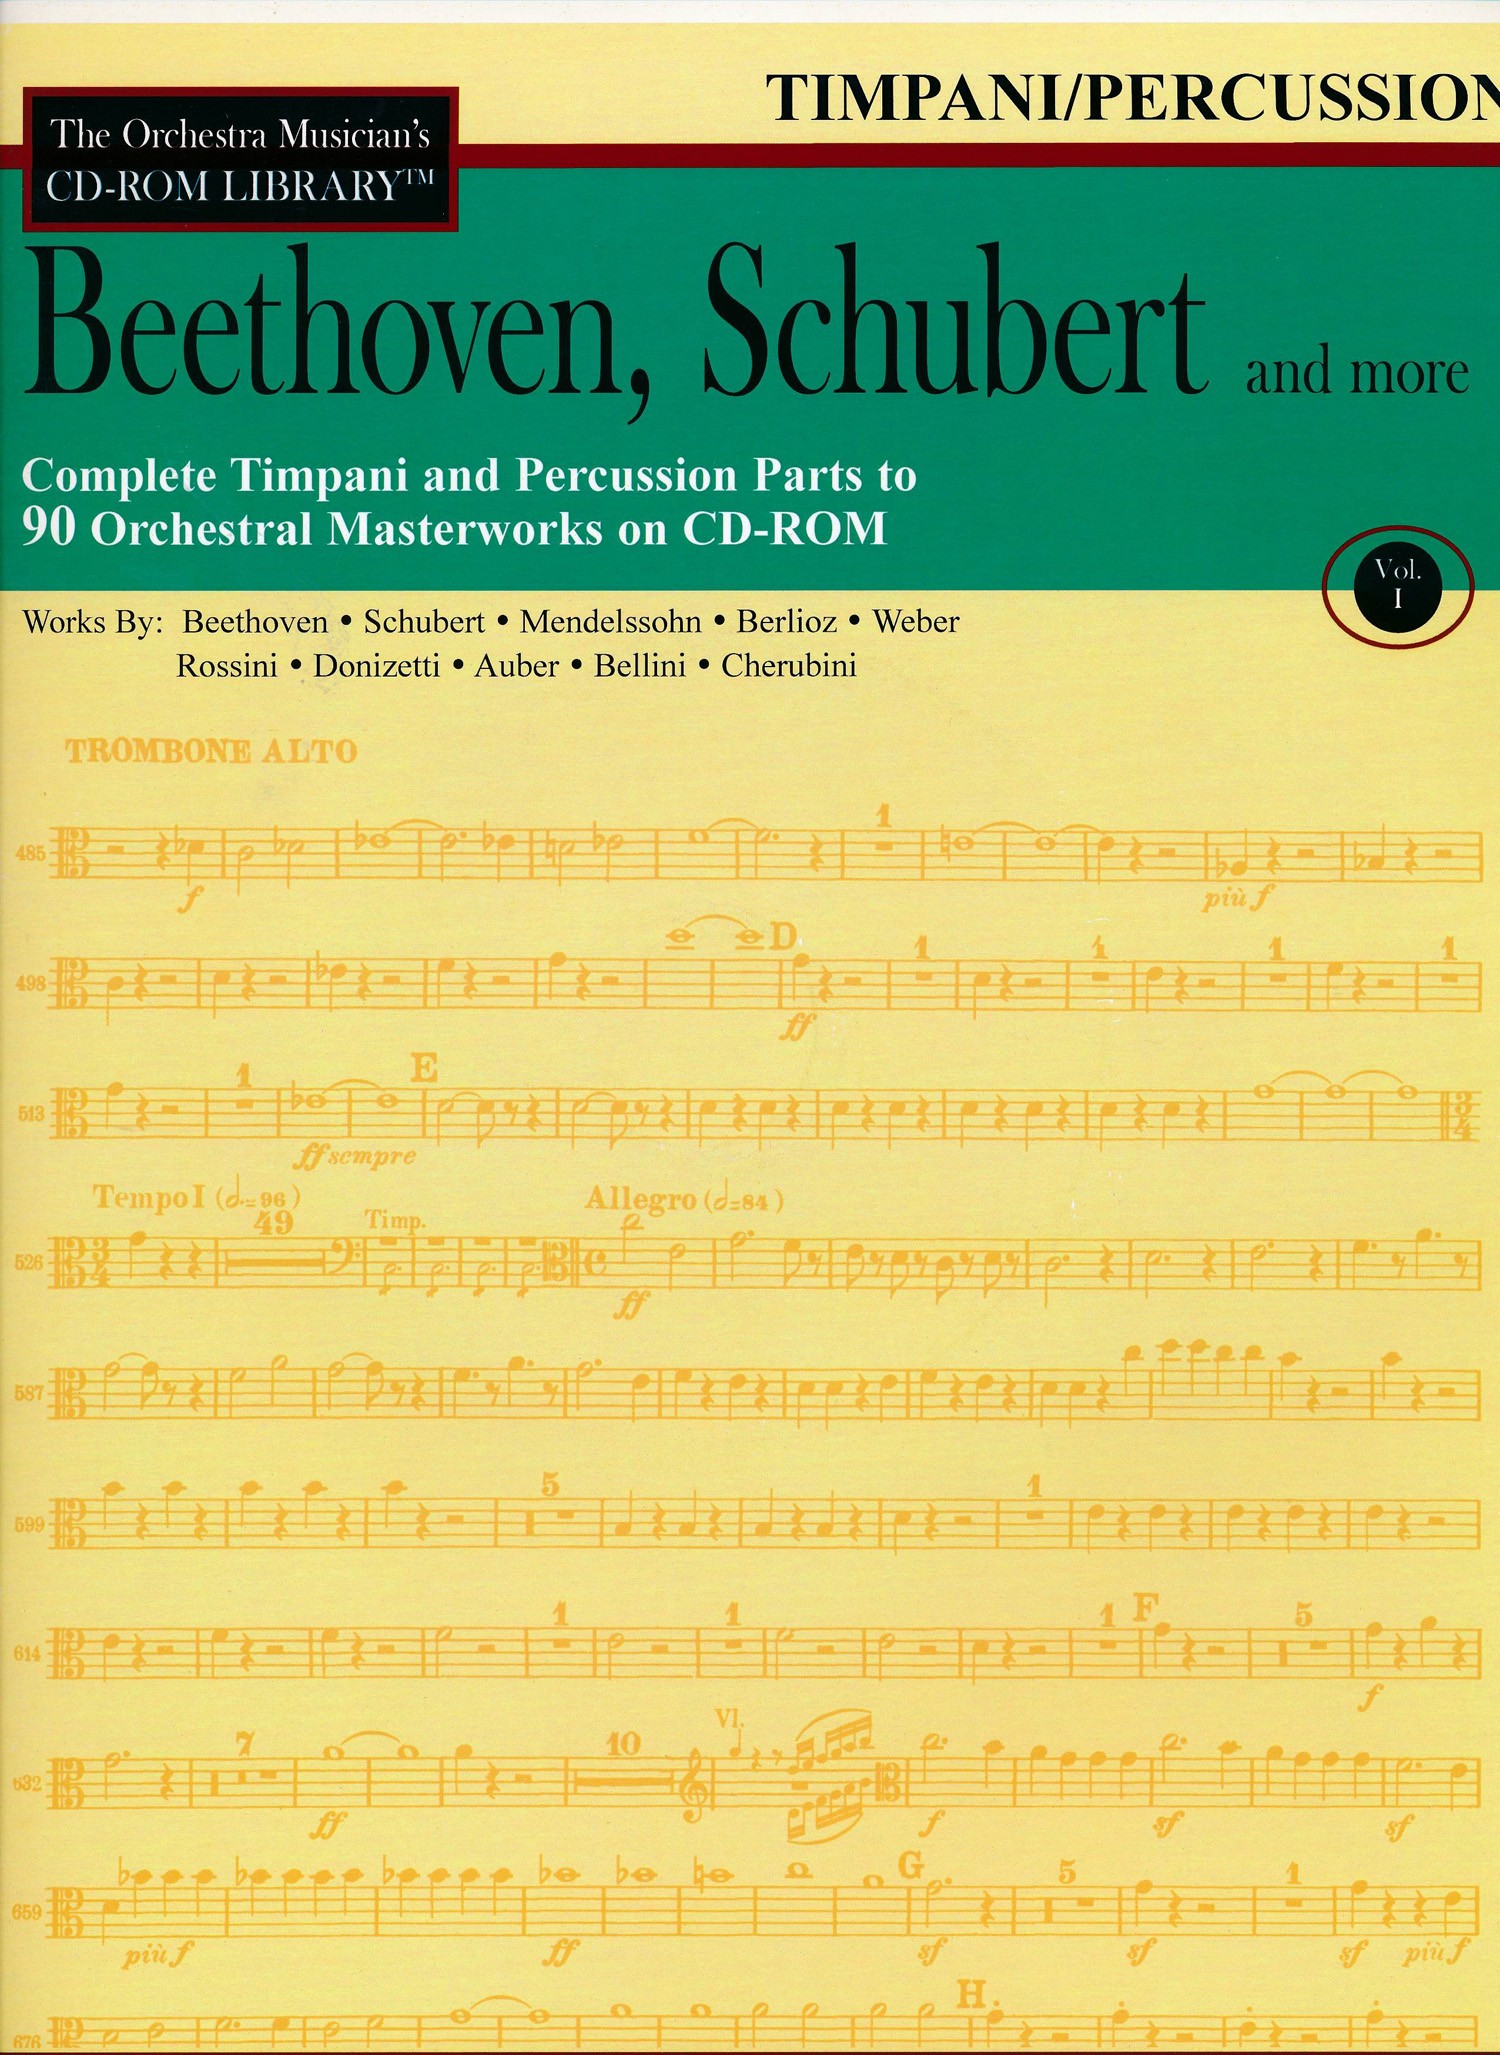 Beethoven, Schubert & More - Volume 1 (CD Library)